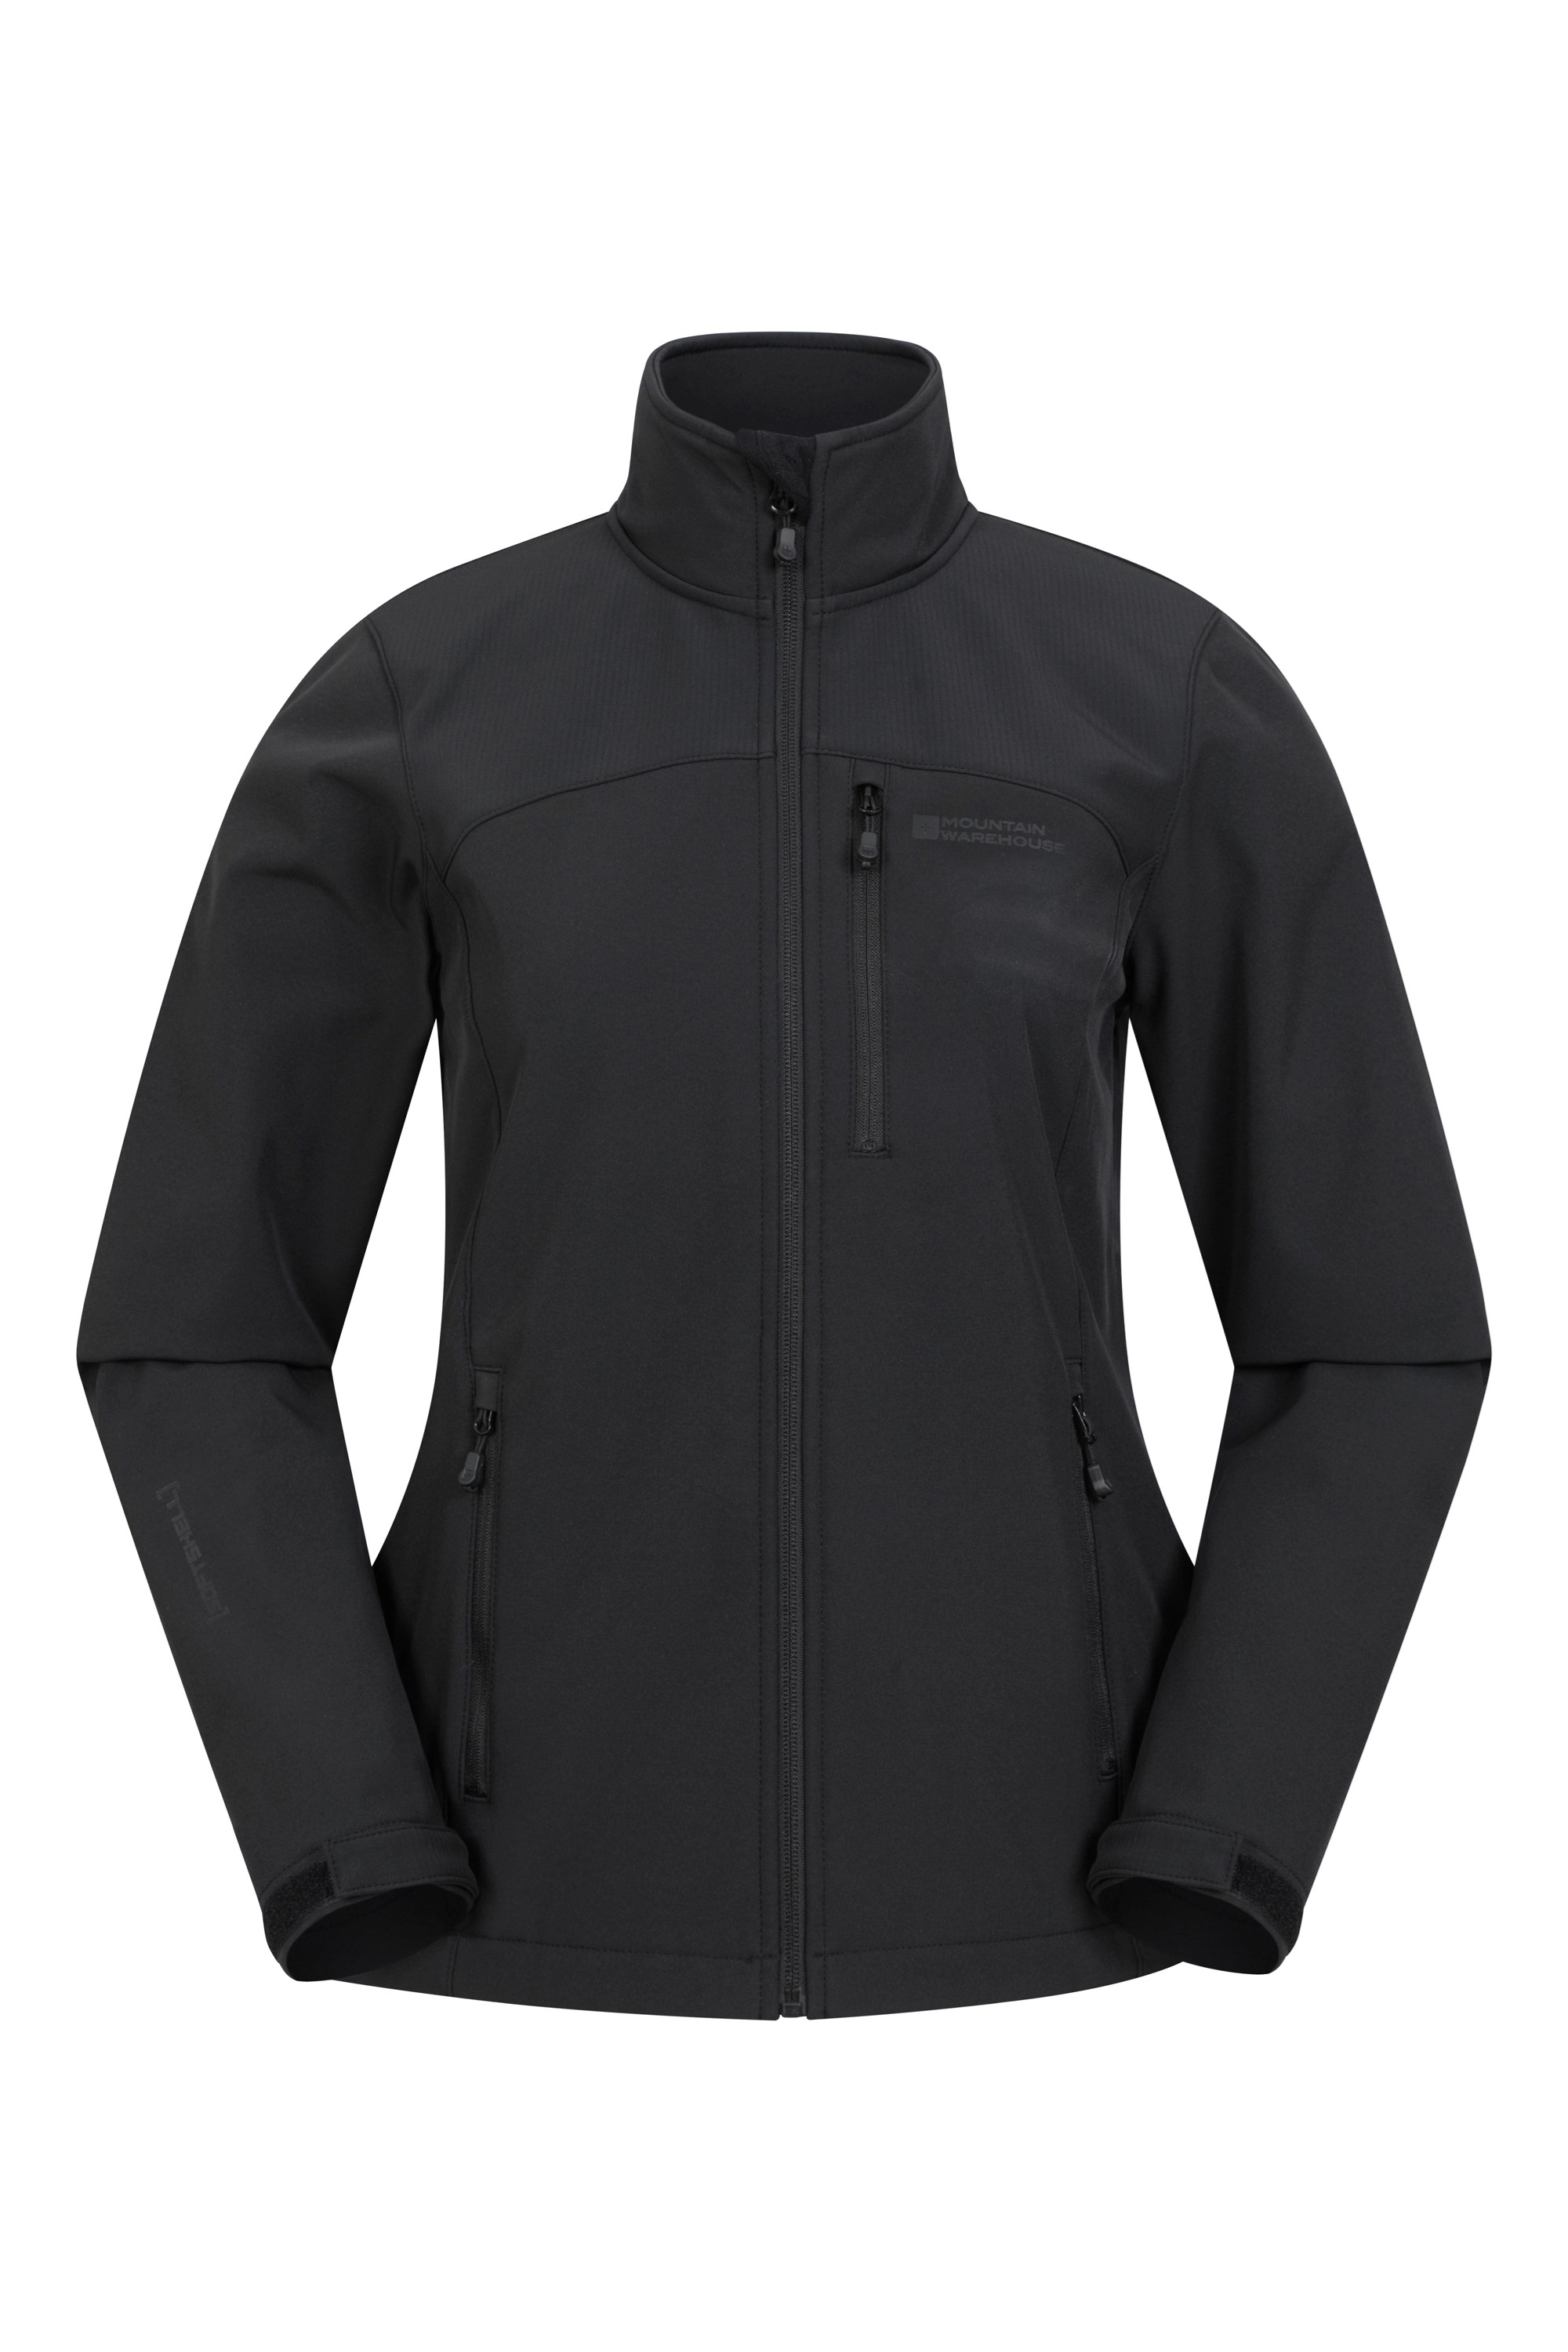 Grasmere Womens Softshell Jacket - Black